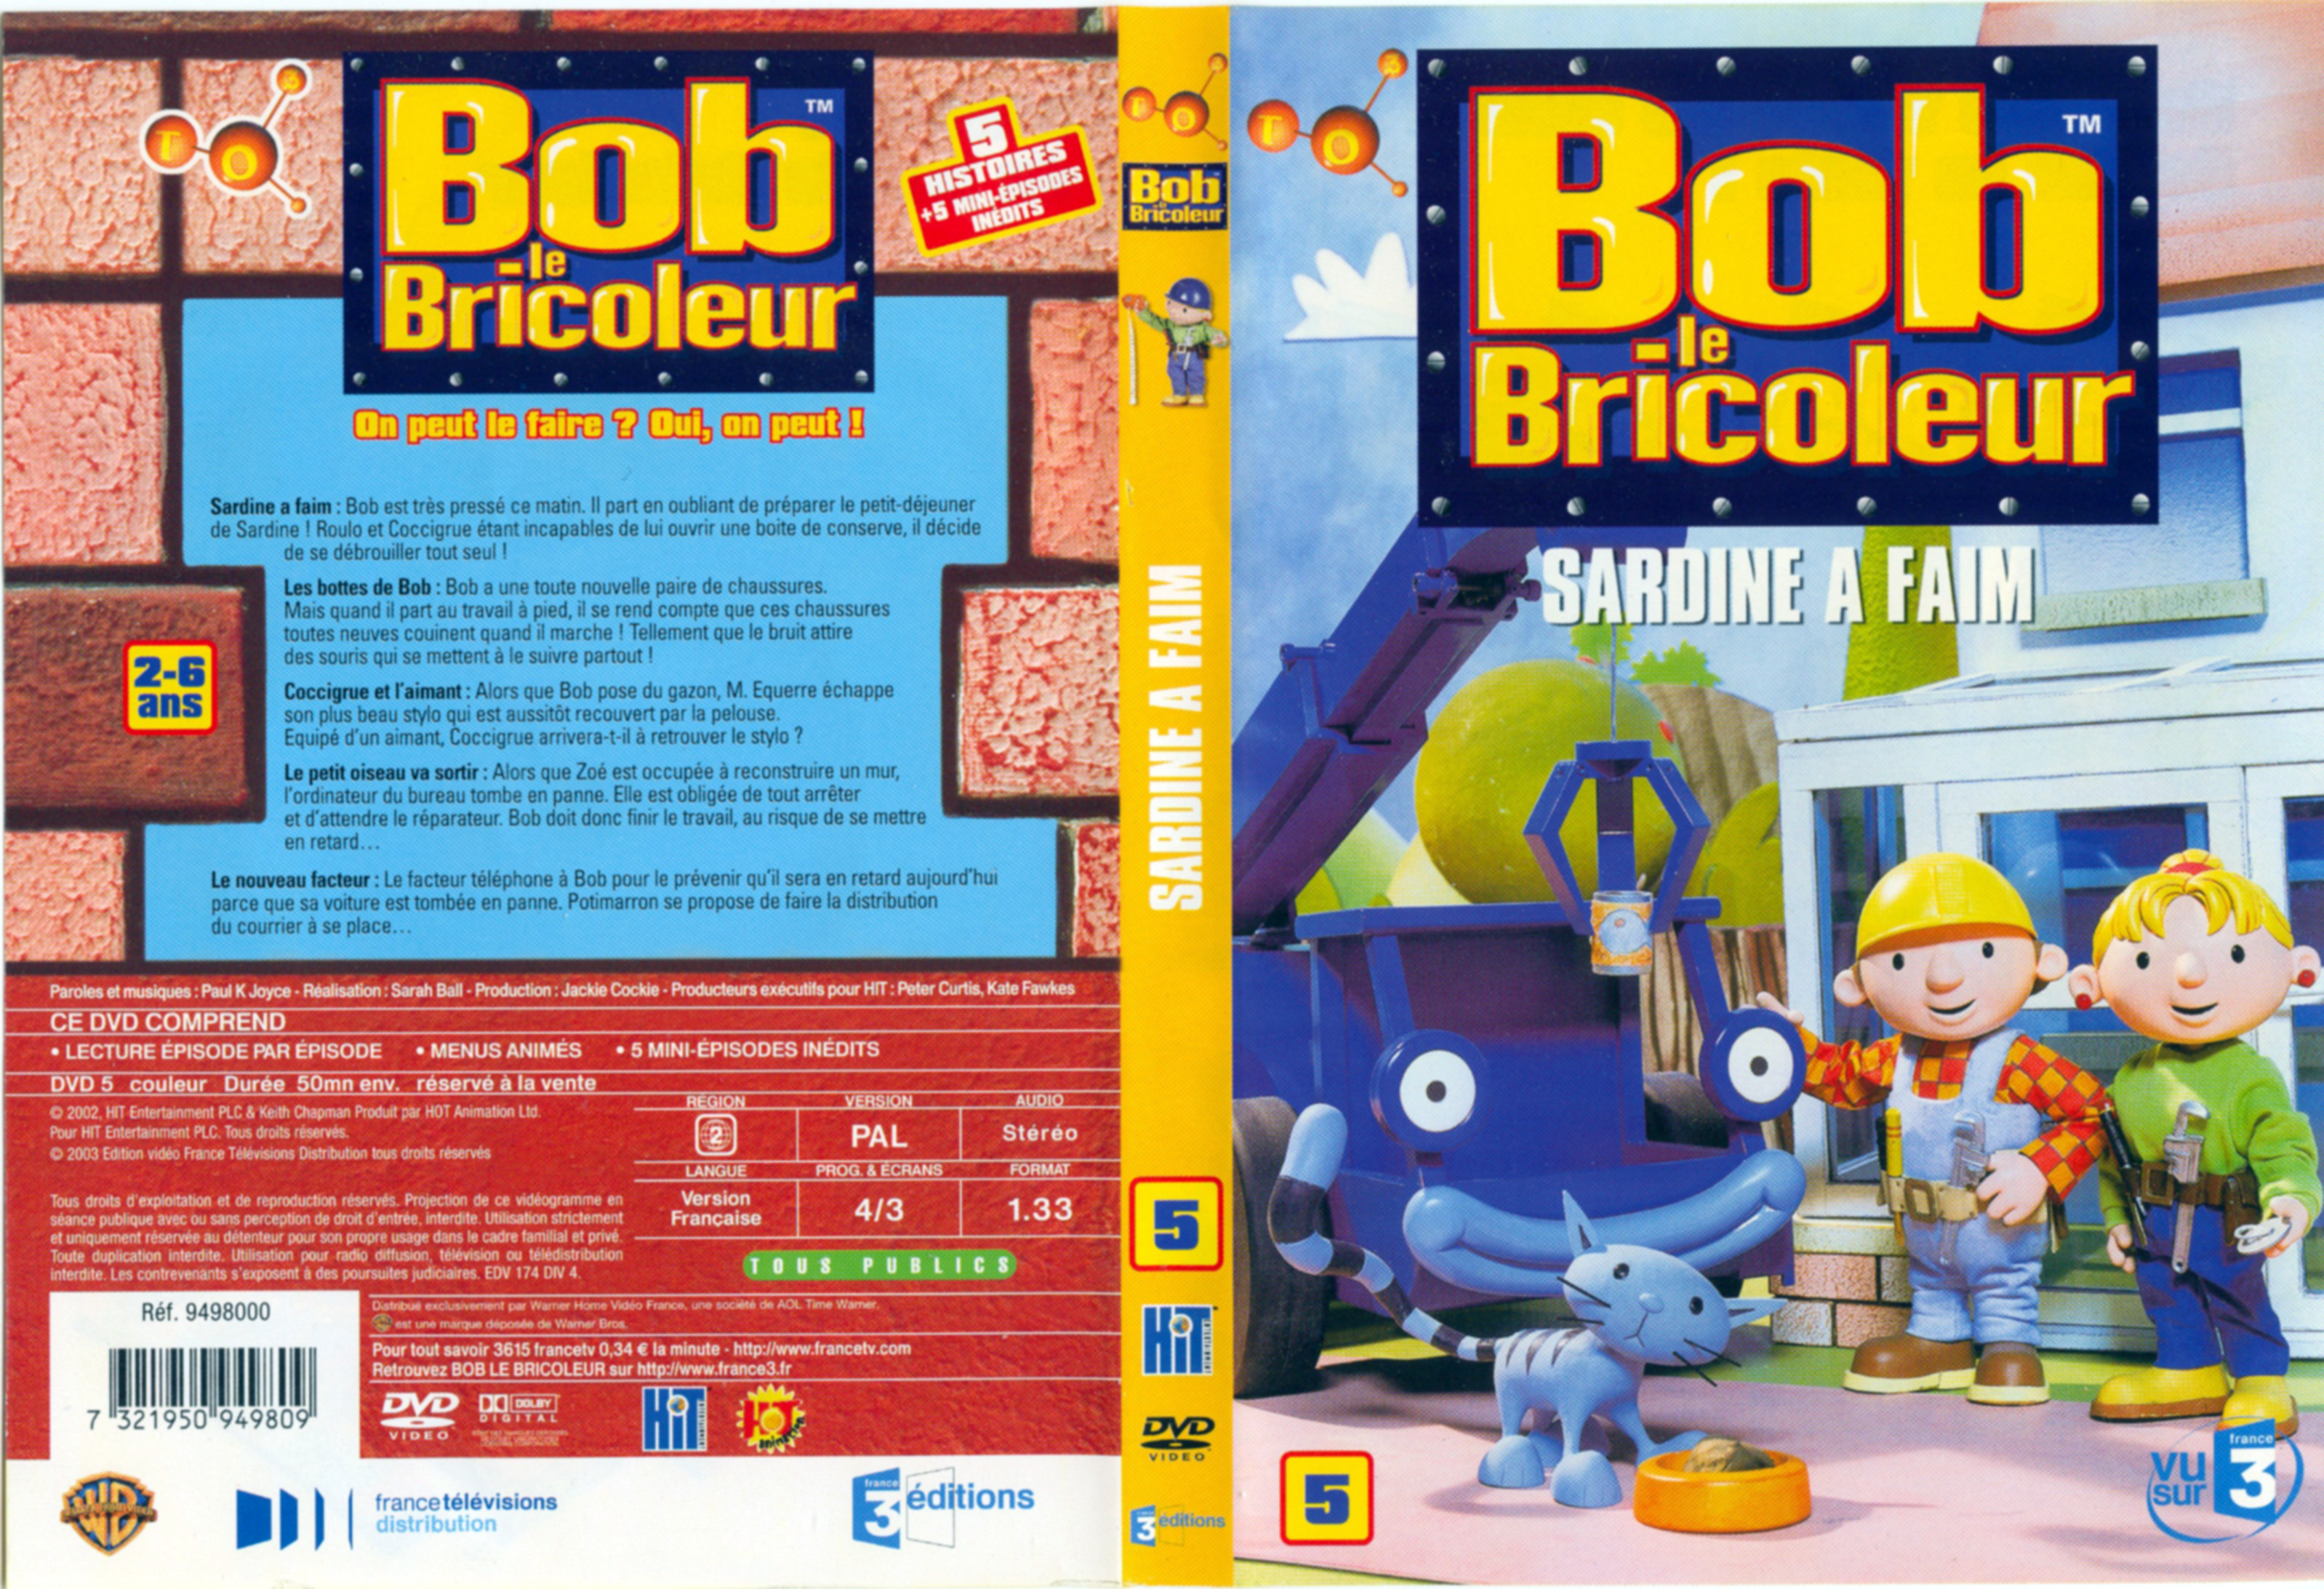 Jaquette DVD Bob le bricoleur Sardine a faim